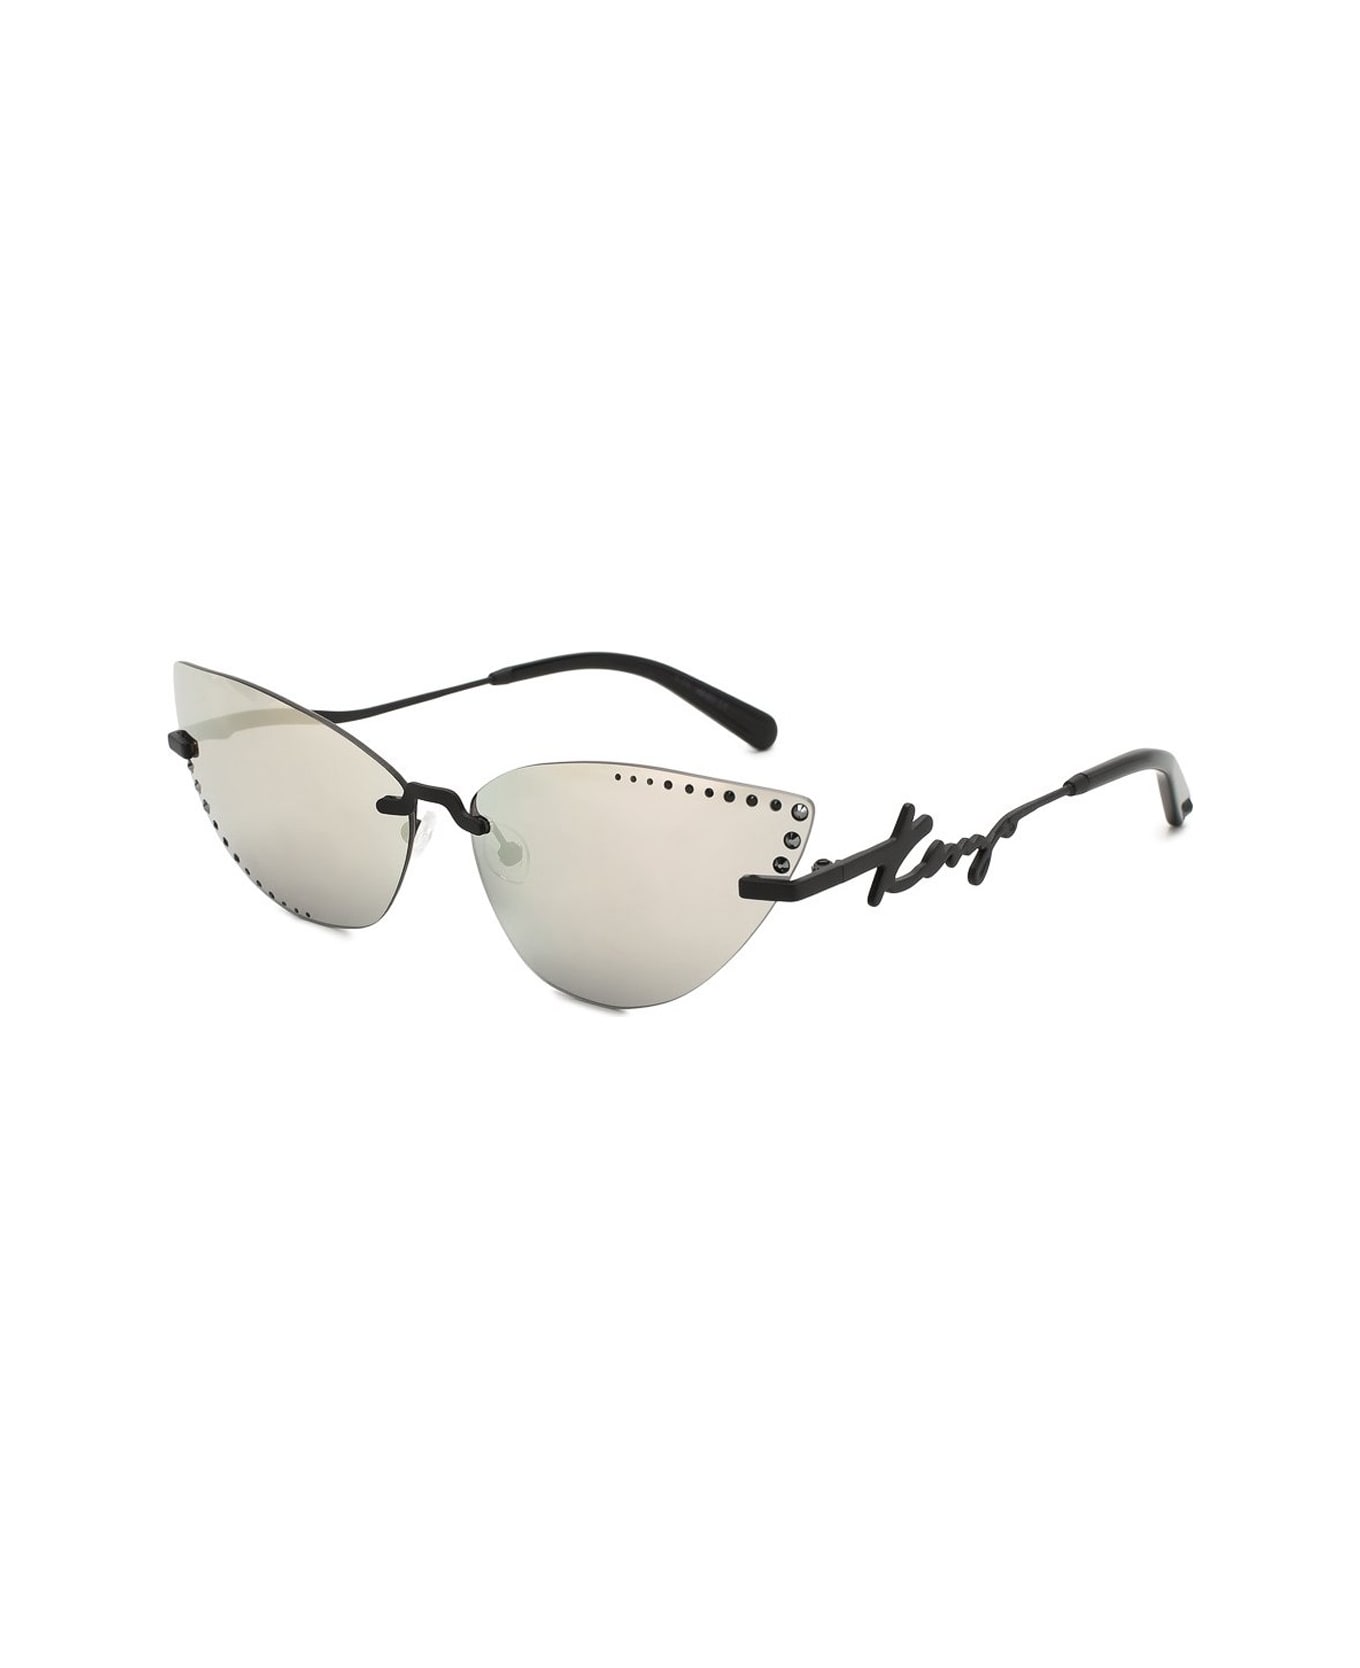 Kenzo Kz40004u Sunglasses - Nero サングラス